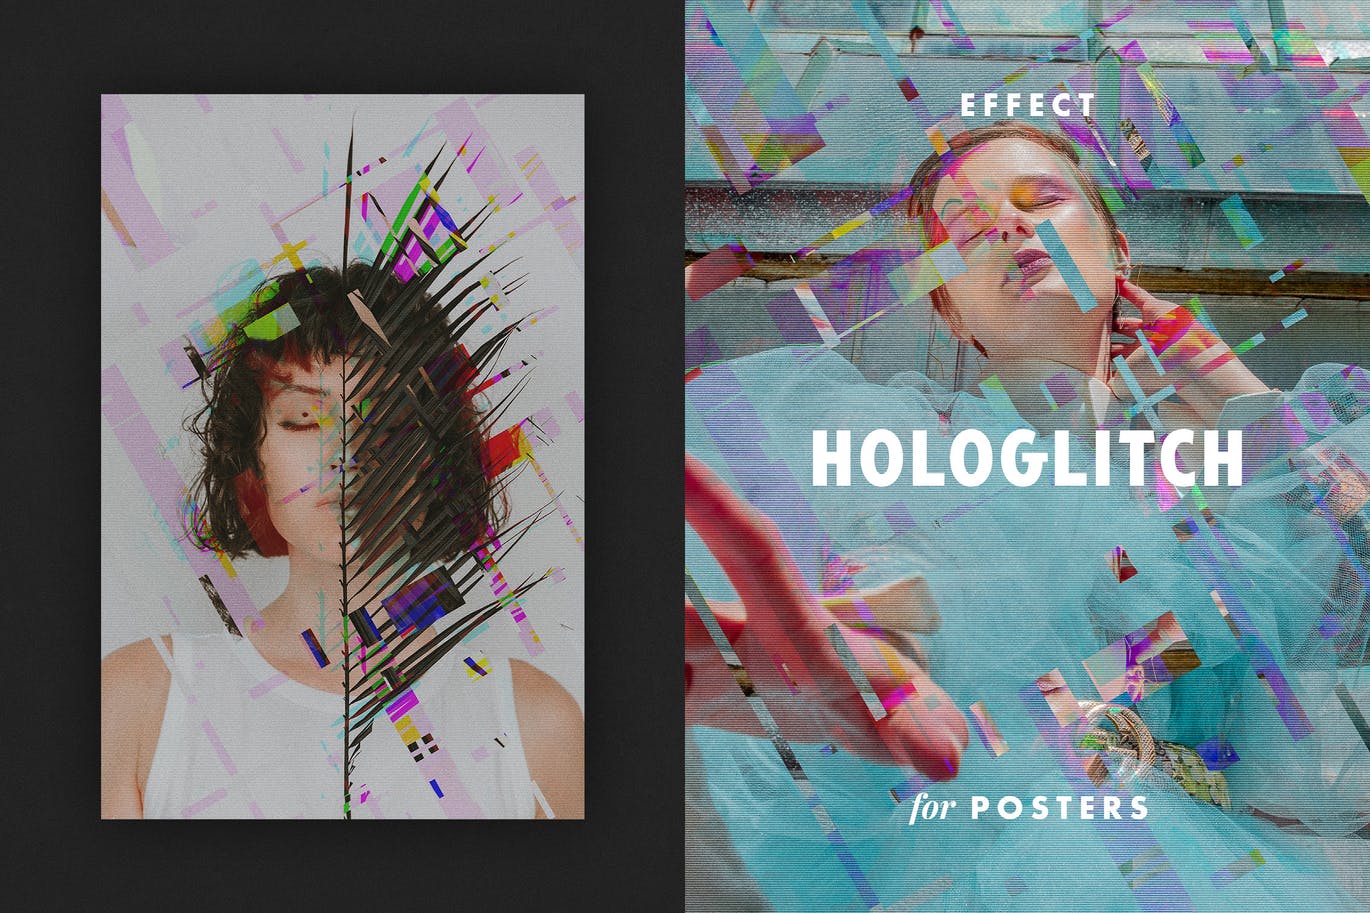 彩色故障效果海报模板 Hologlitch Effect for Posters 插件预设 第1张